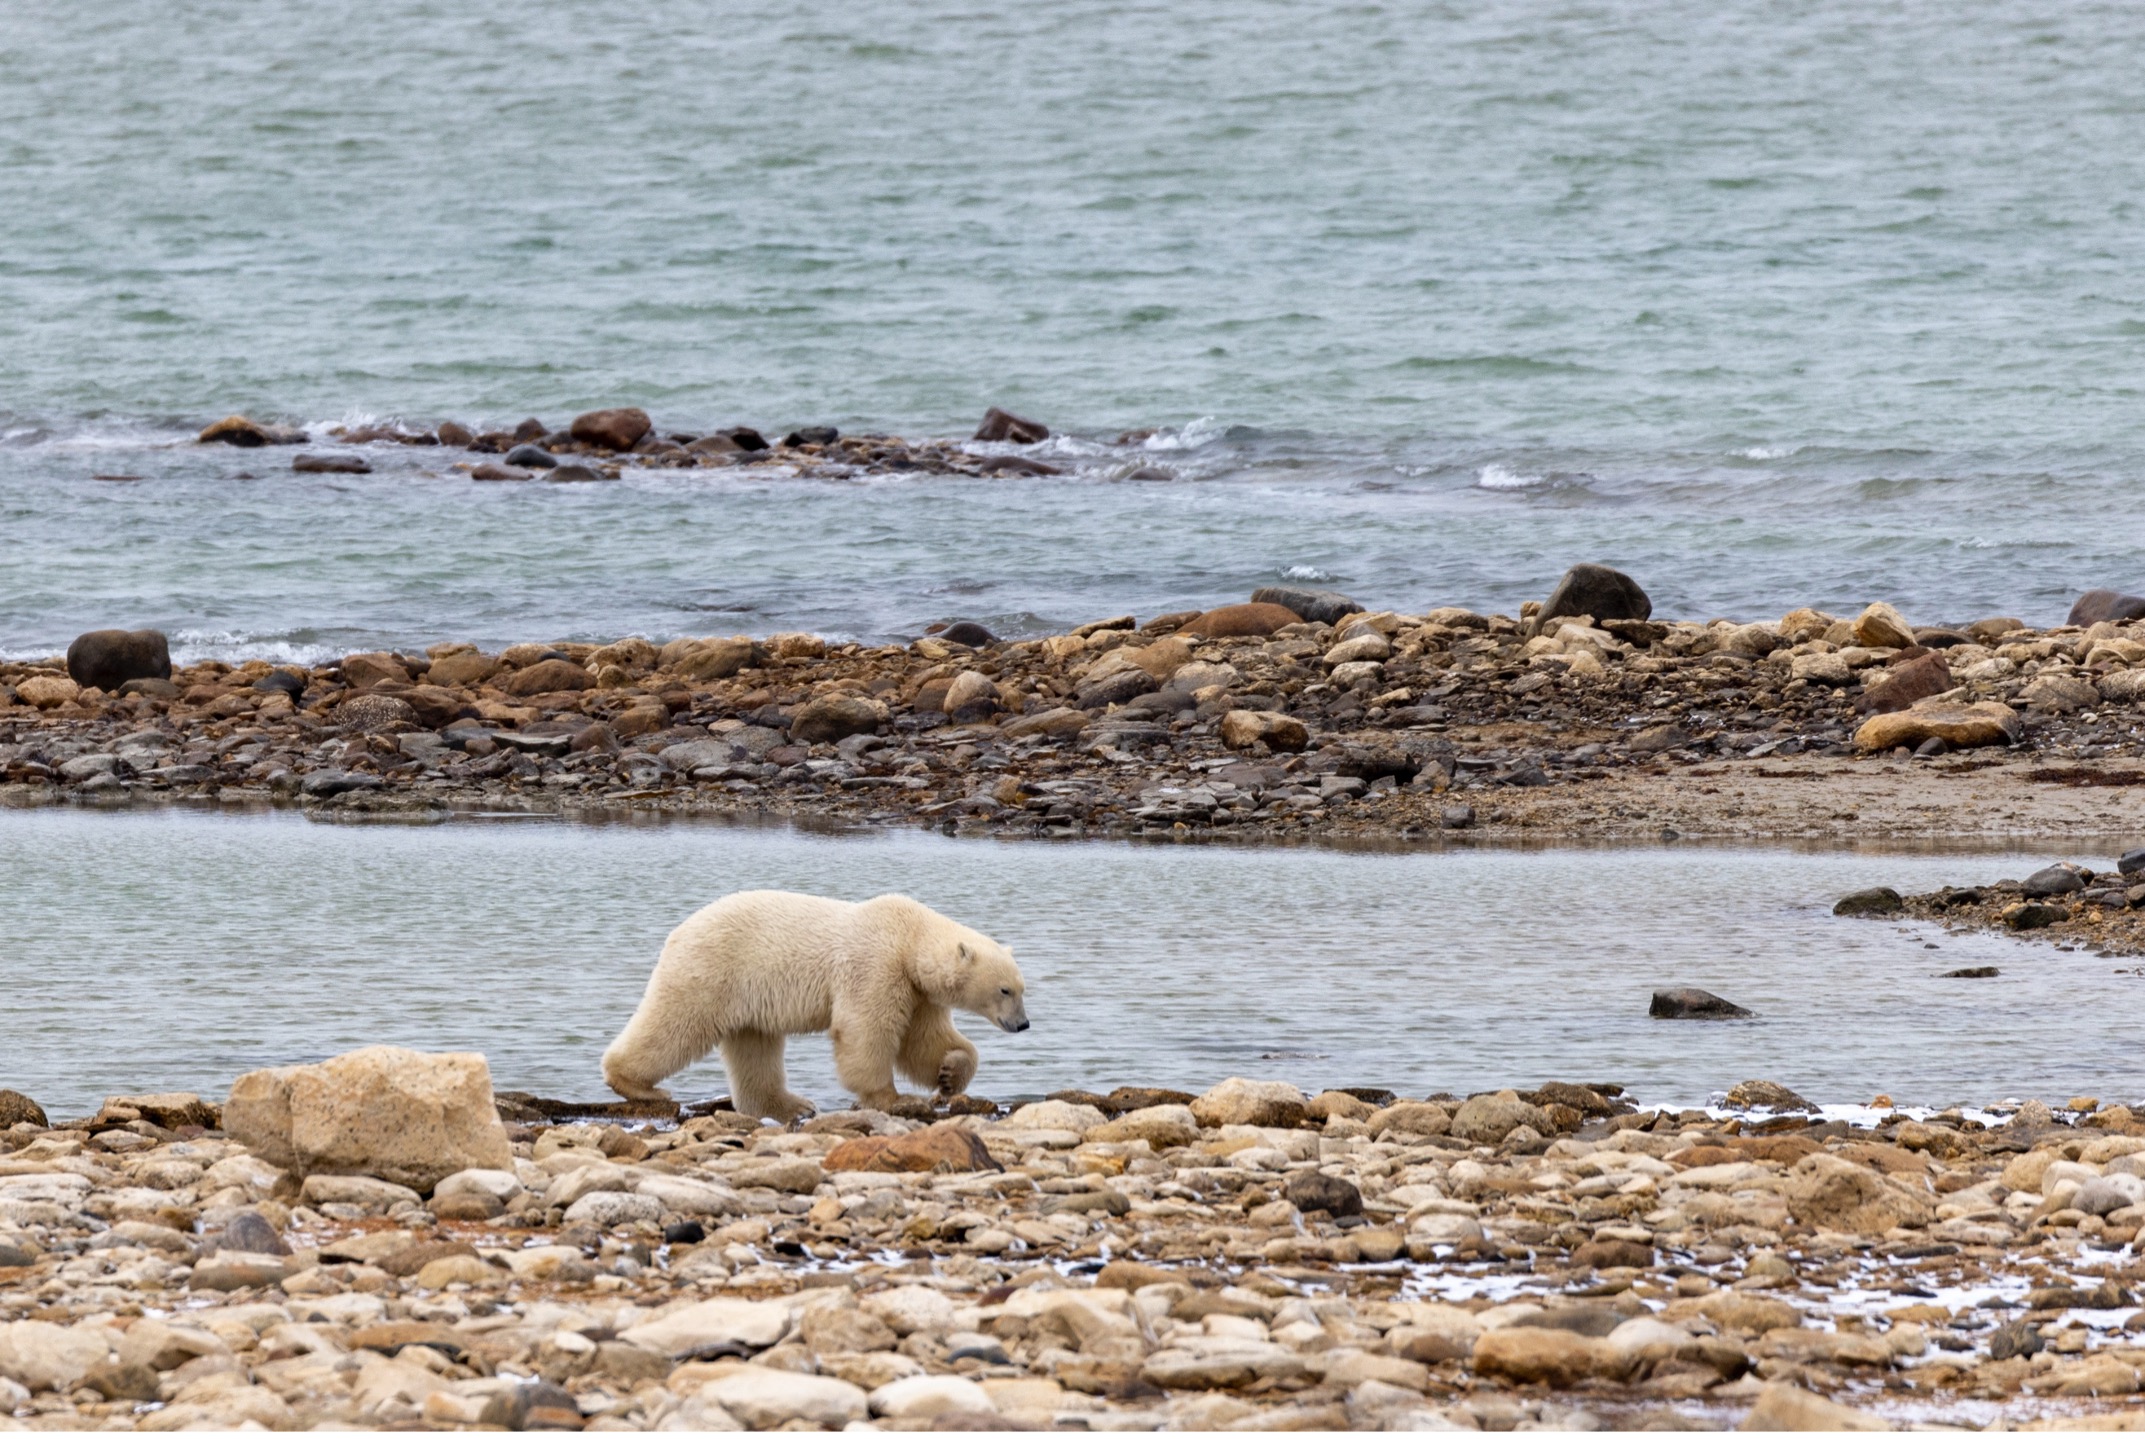 a polar bear walks on a rocky shoreline